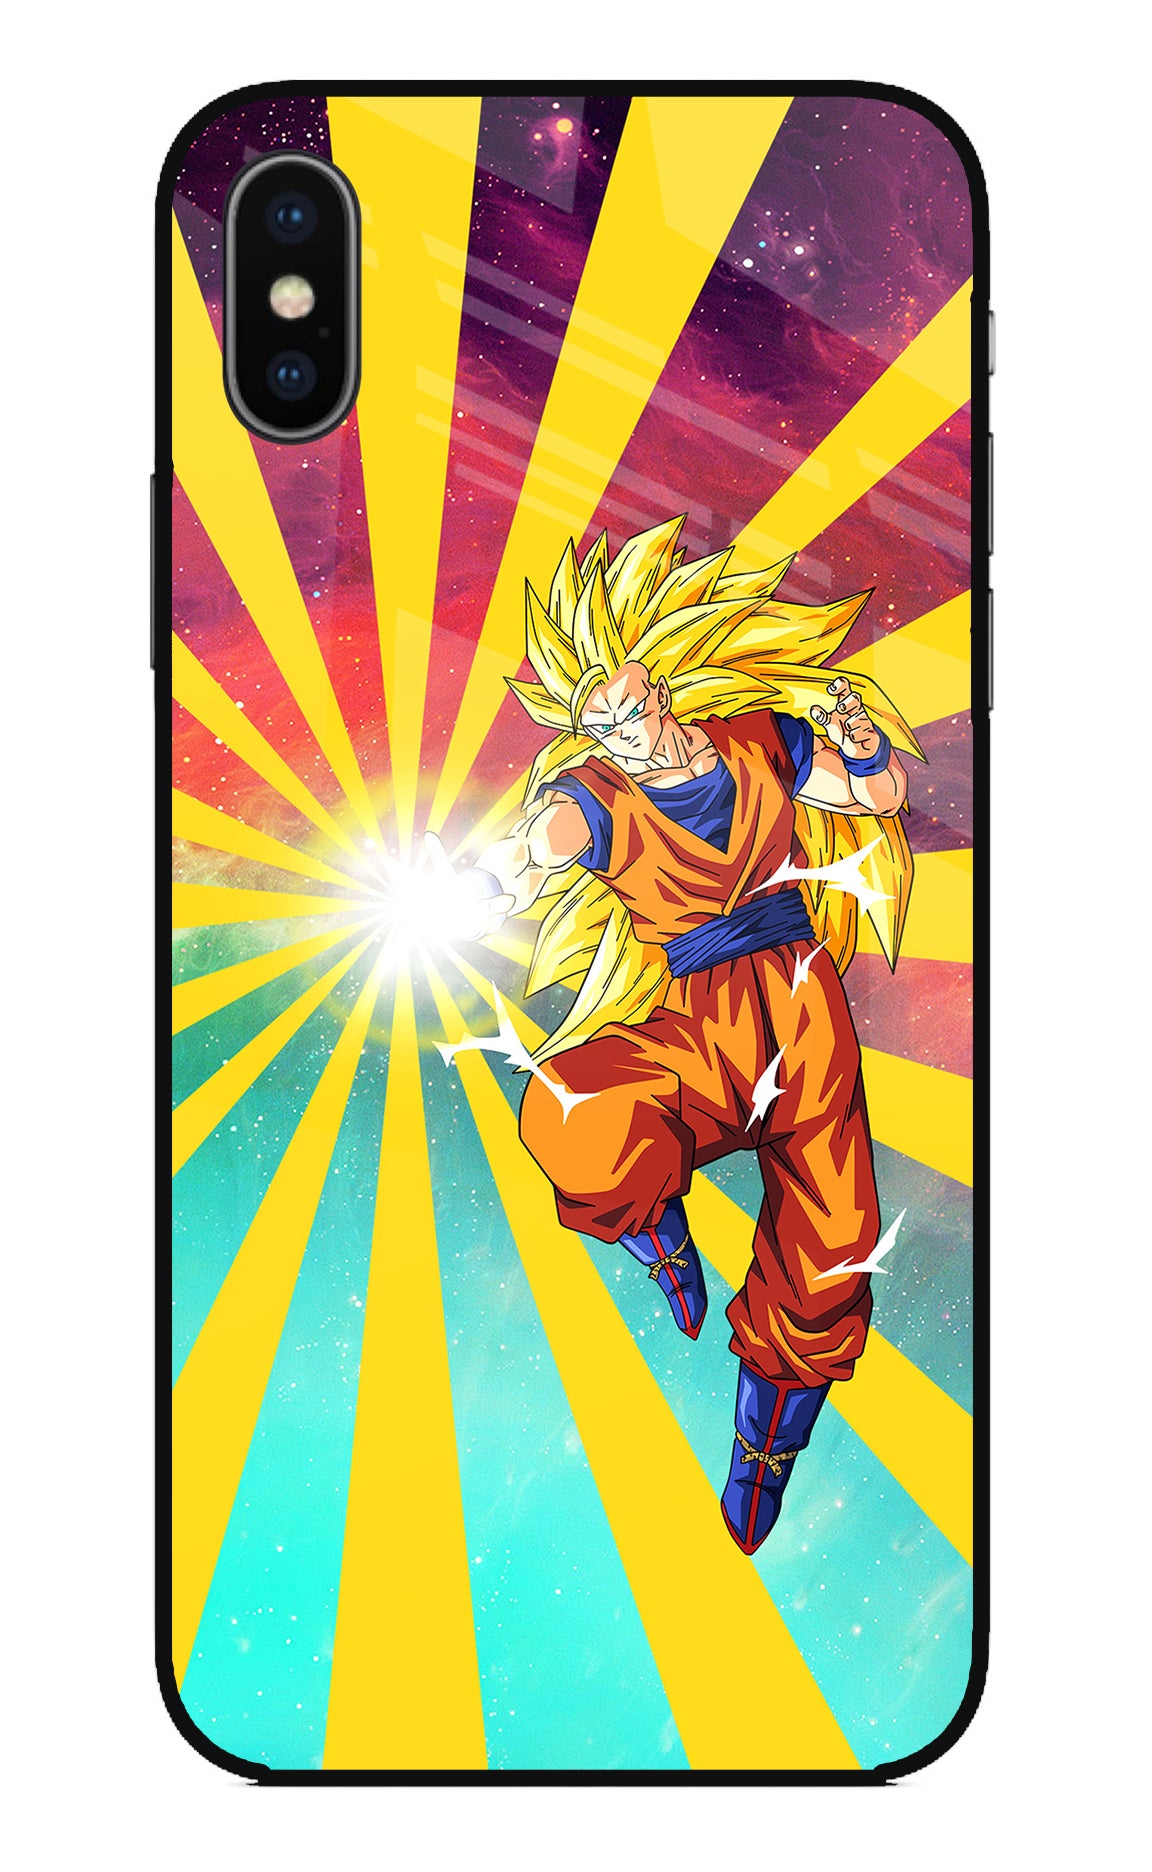 Goku Super Saiyan iPhone X Back Cover